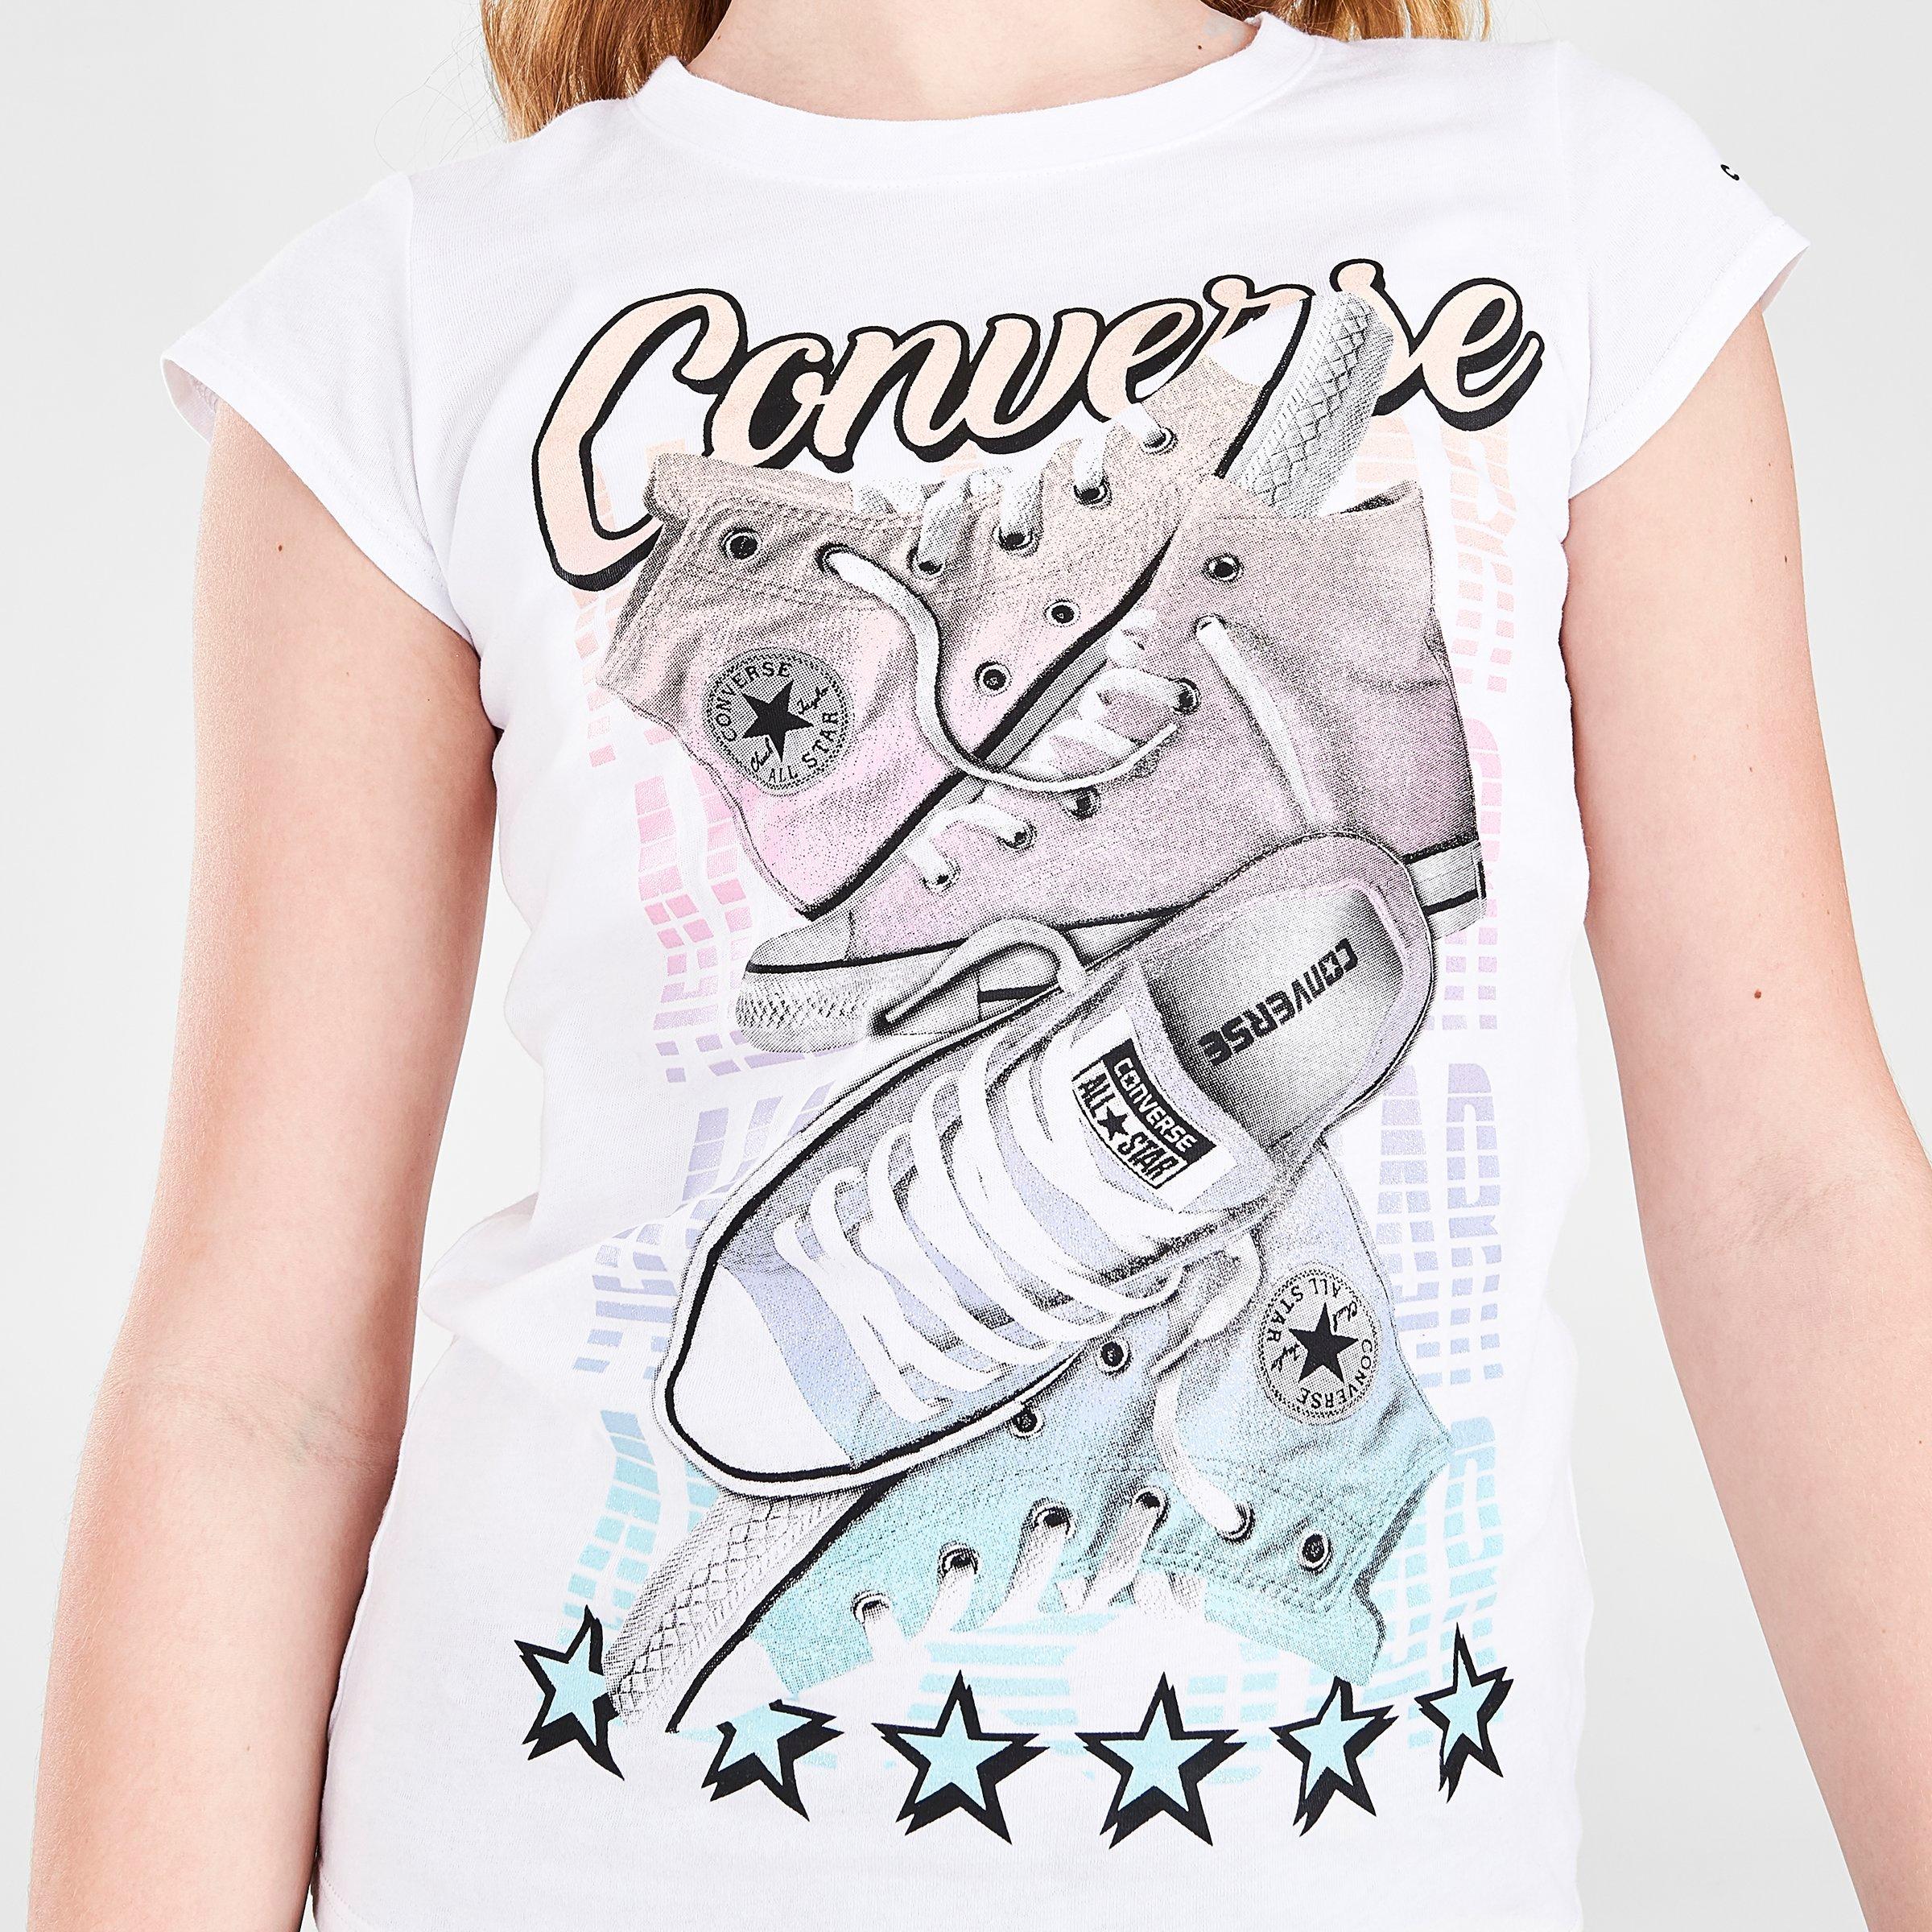 converse play t shirt